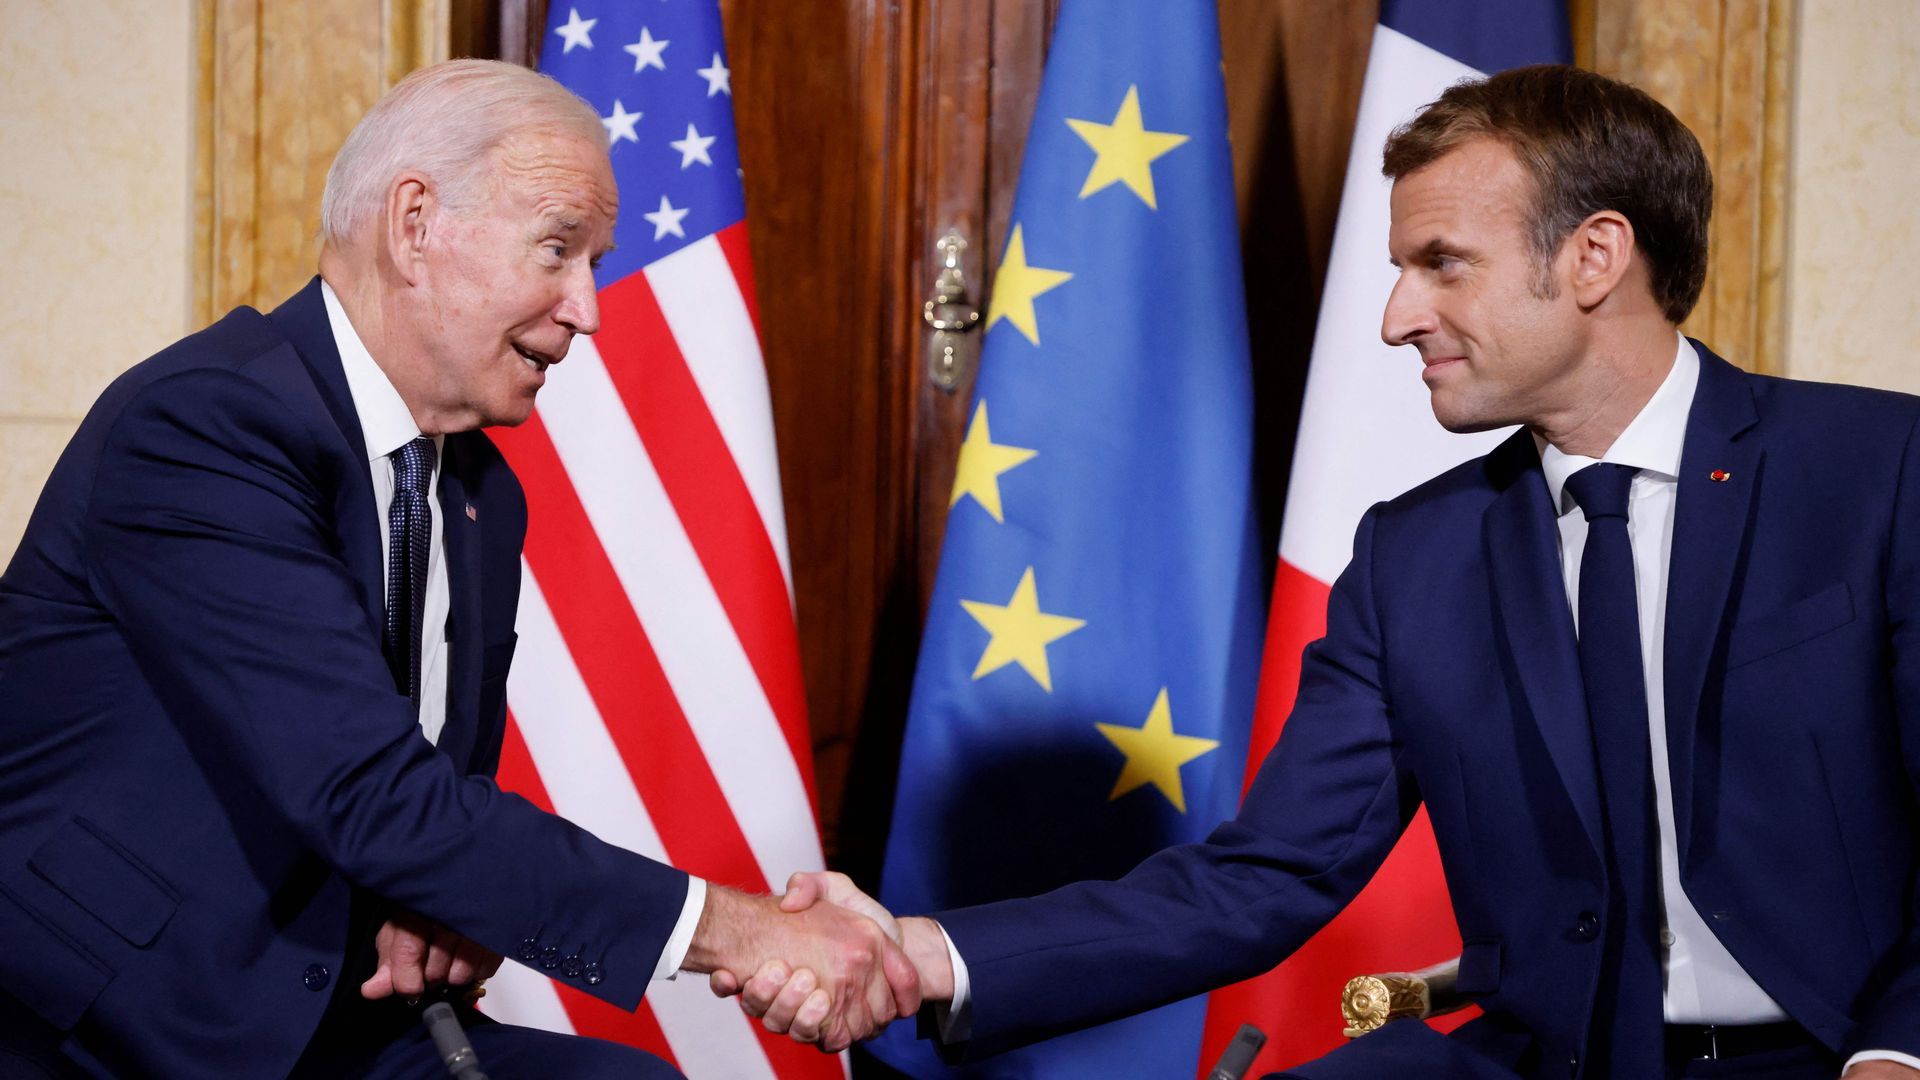 Biden shaking hands with Macron